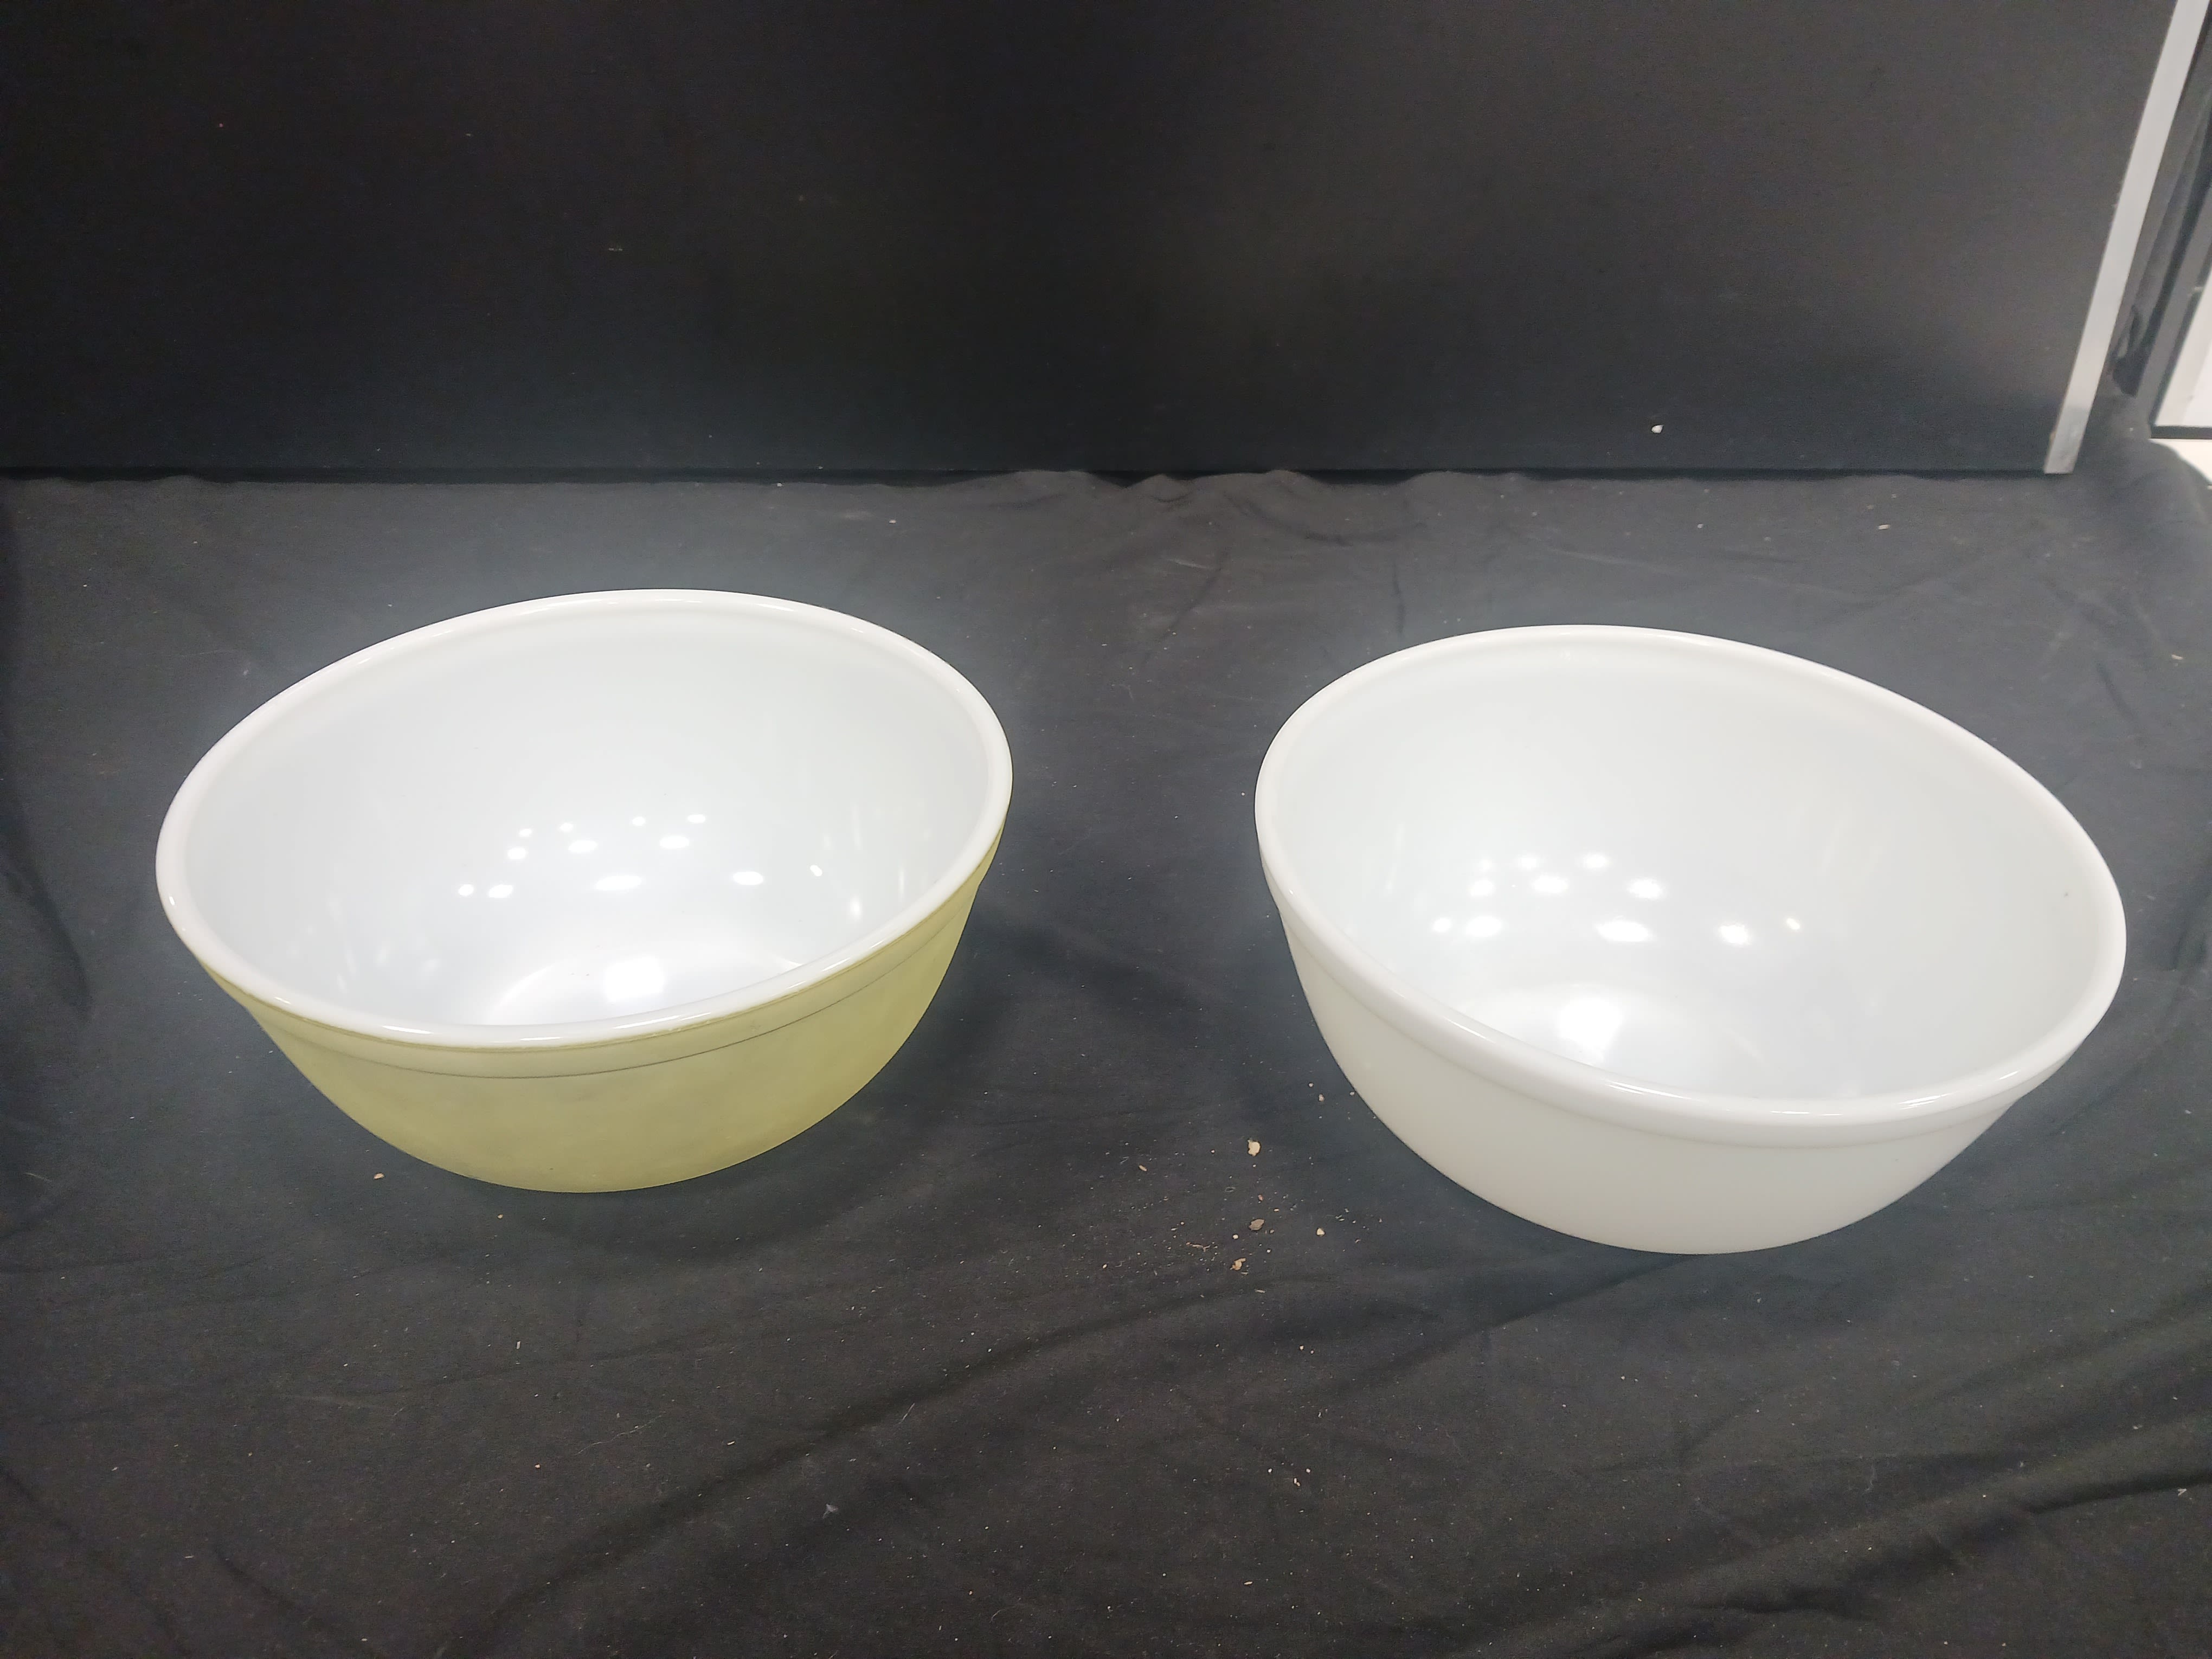 Yellow Green Pyrex Bowl, 2 Quart Mixing Bowl, Pyrex Bowl, Milk Glass Pyrex  Vintage Bowl, Vintage Kitchenware Pyrex, Pyrex Mixing Bowl 